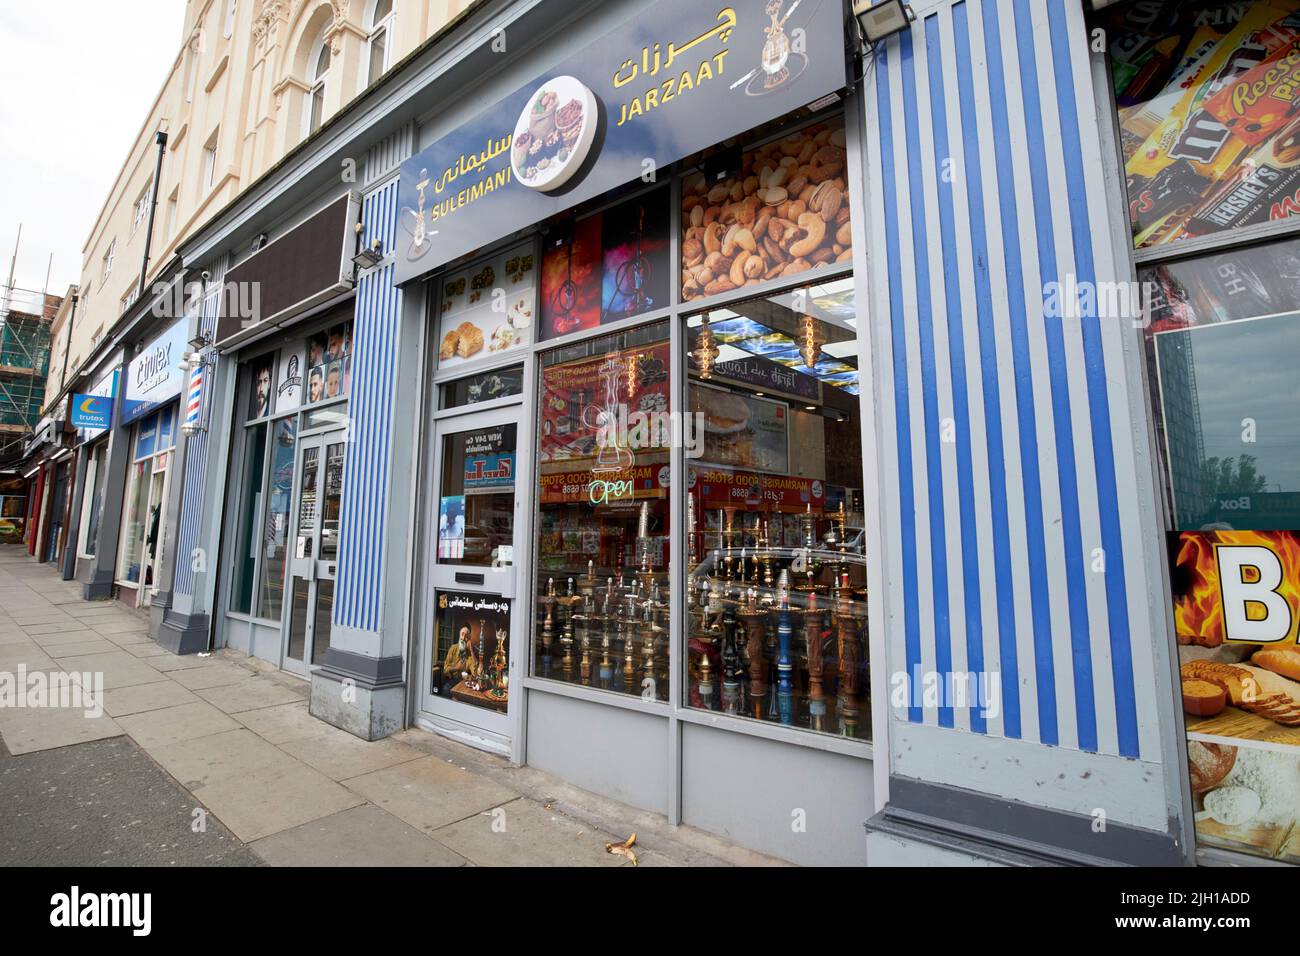 Immigrant shisha pipe fumatore negozio london Road Liverpool Inghilterra UK Foto Stock